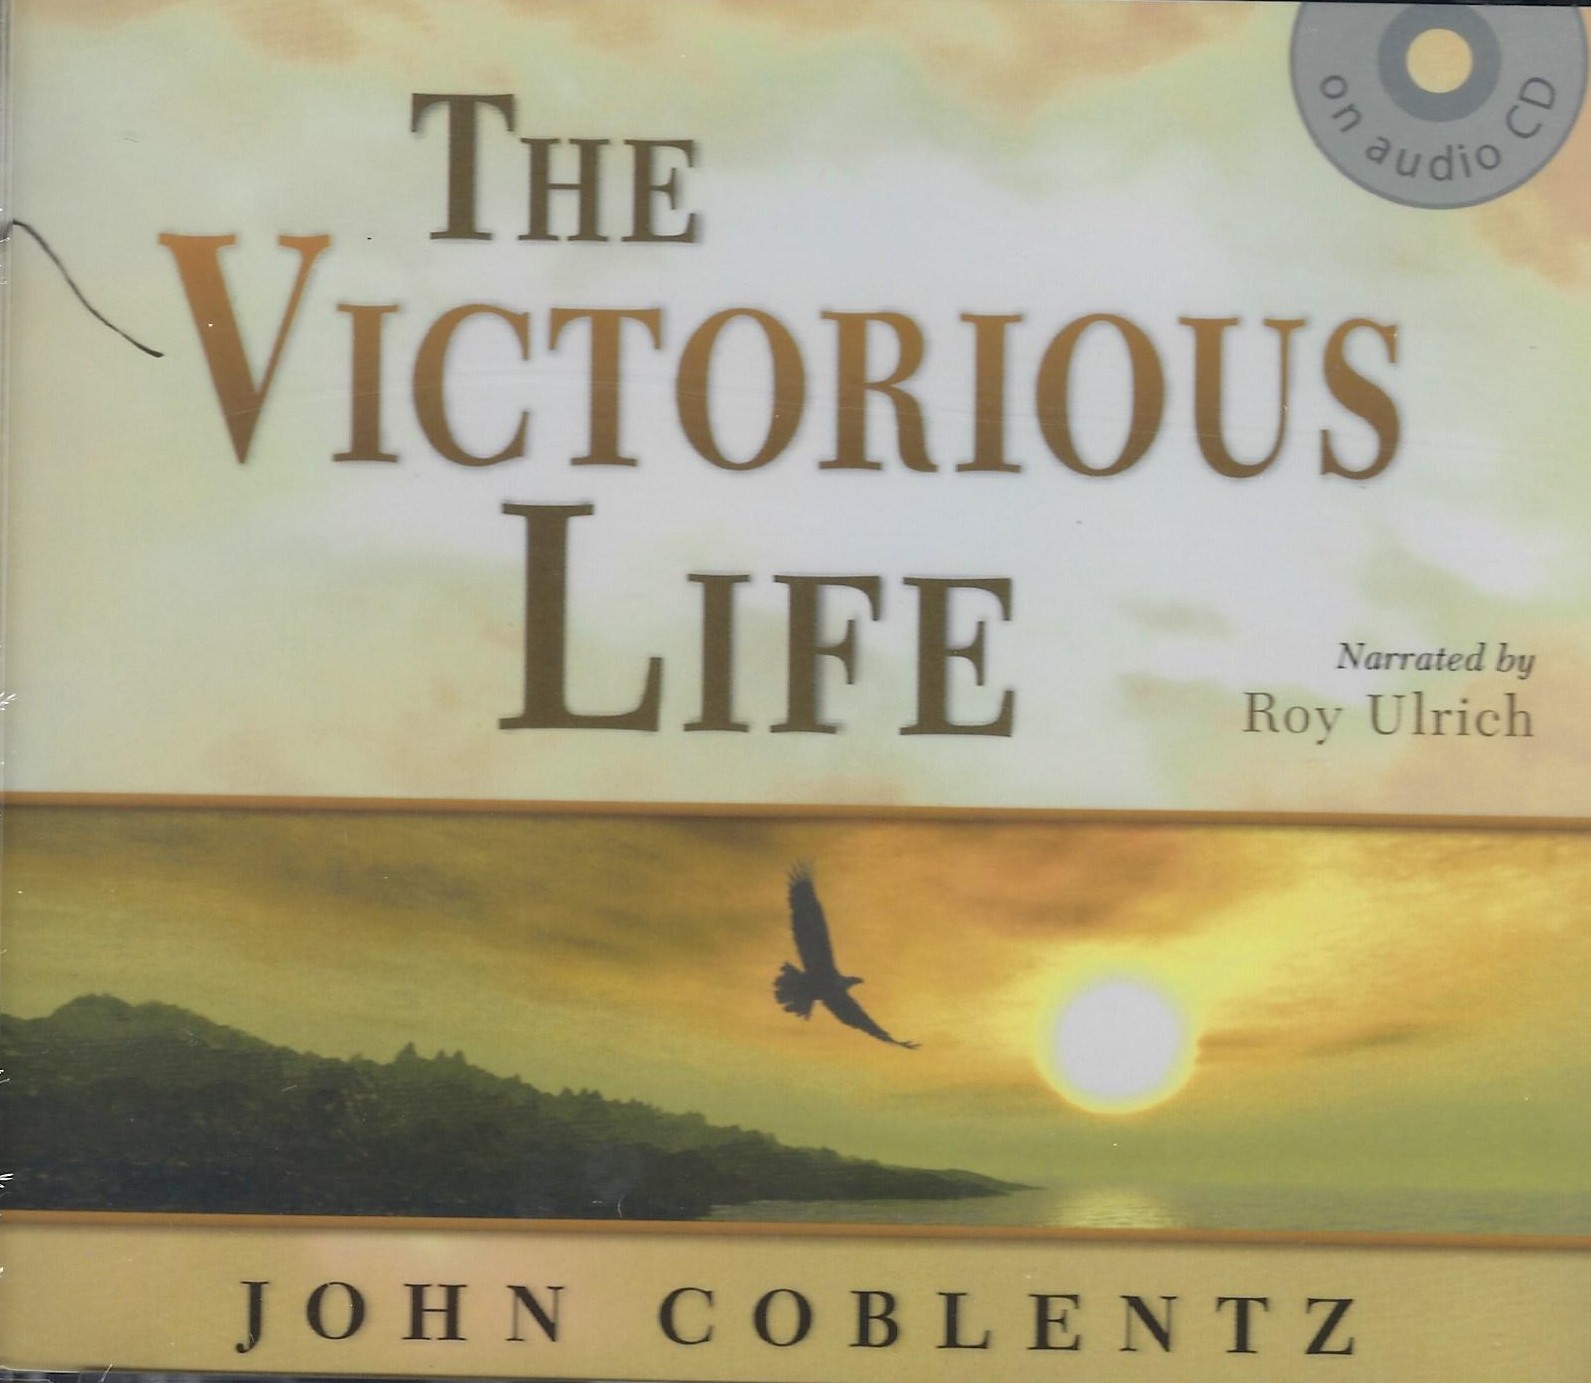 THE VICTORIOUS LIFE Audiobook John Coblentz